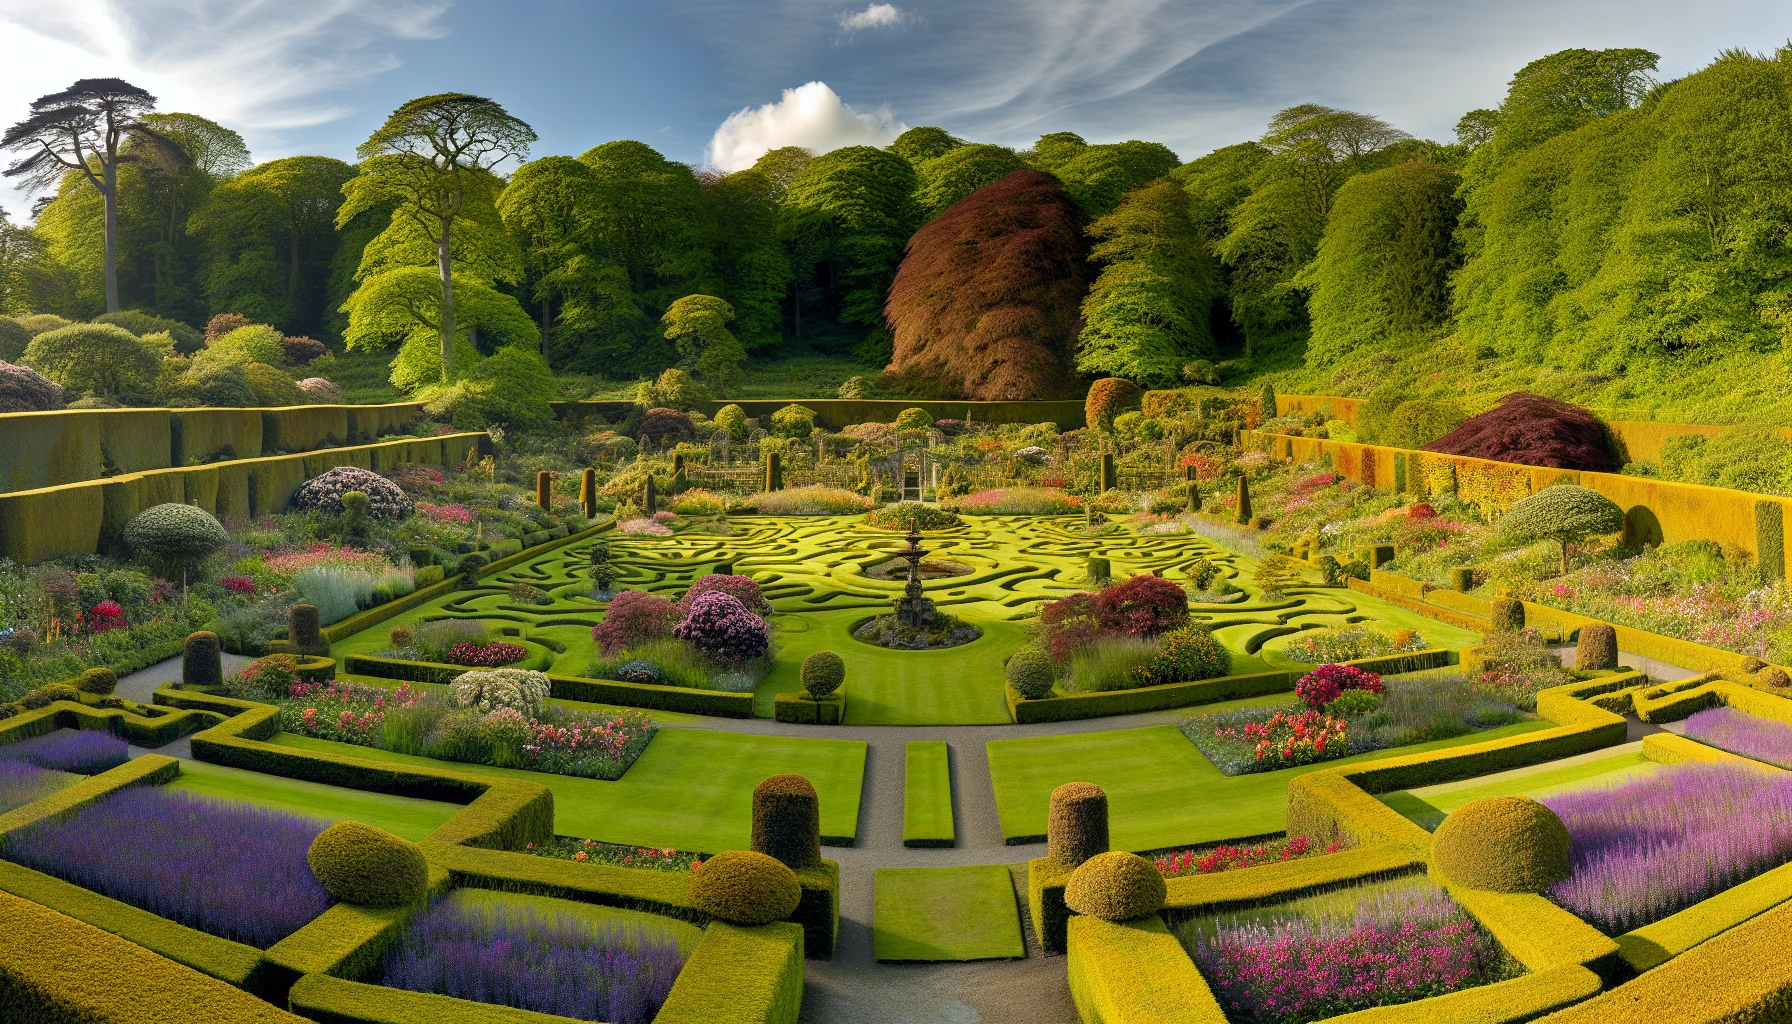 Idyllic view of the formal gardens at Holehird Gardens